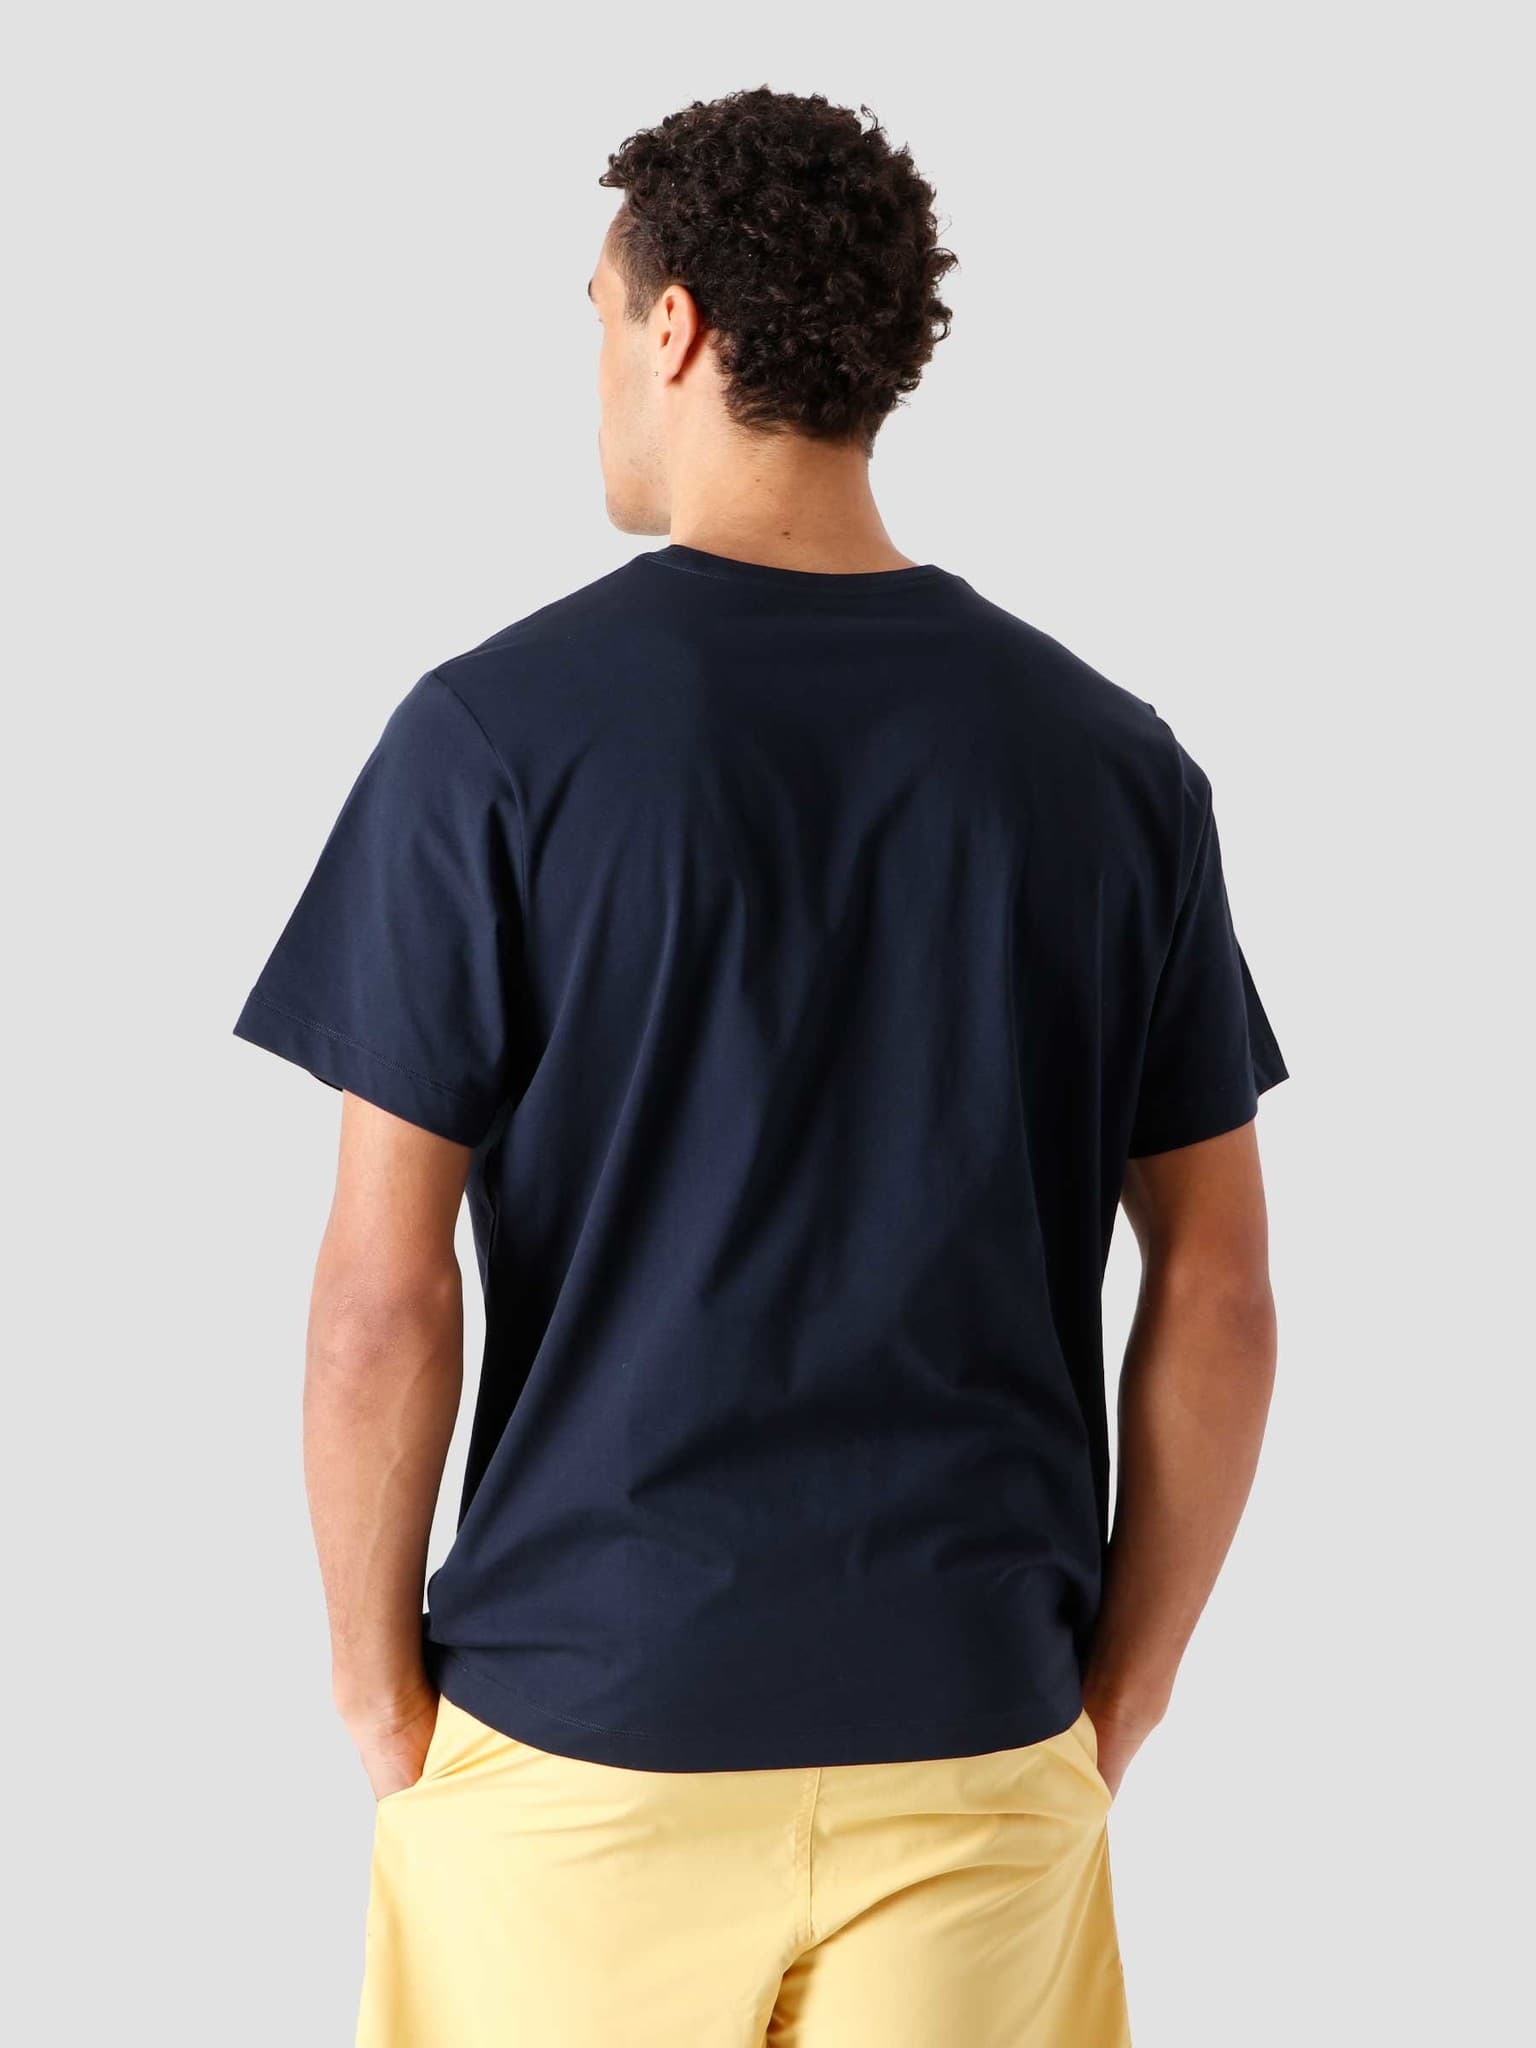 Emblem T-Shirt Kingfisher 24026